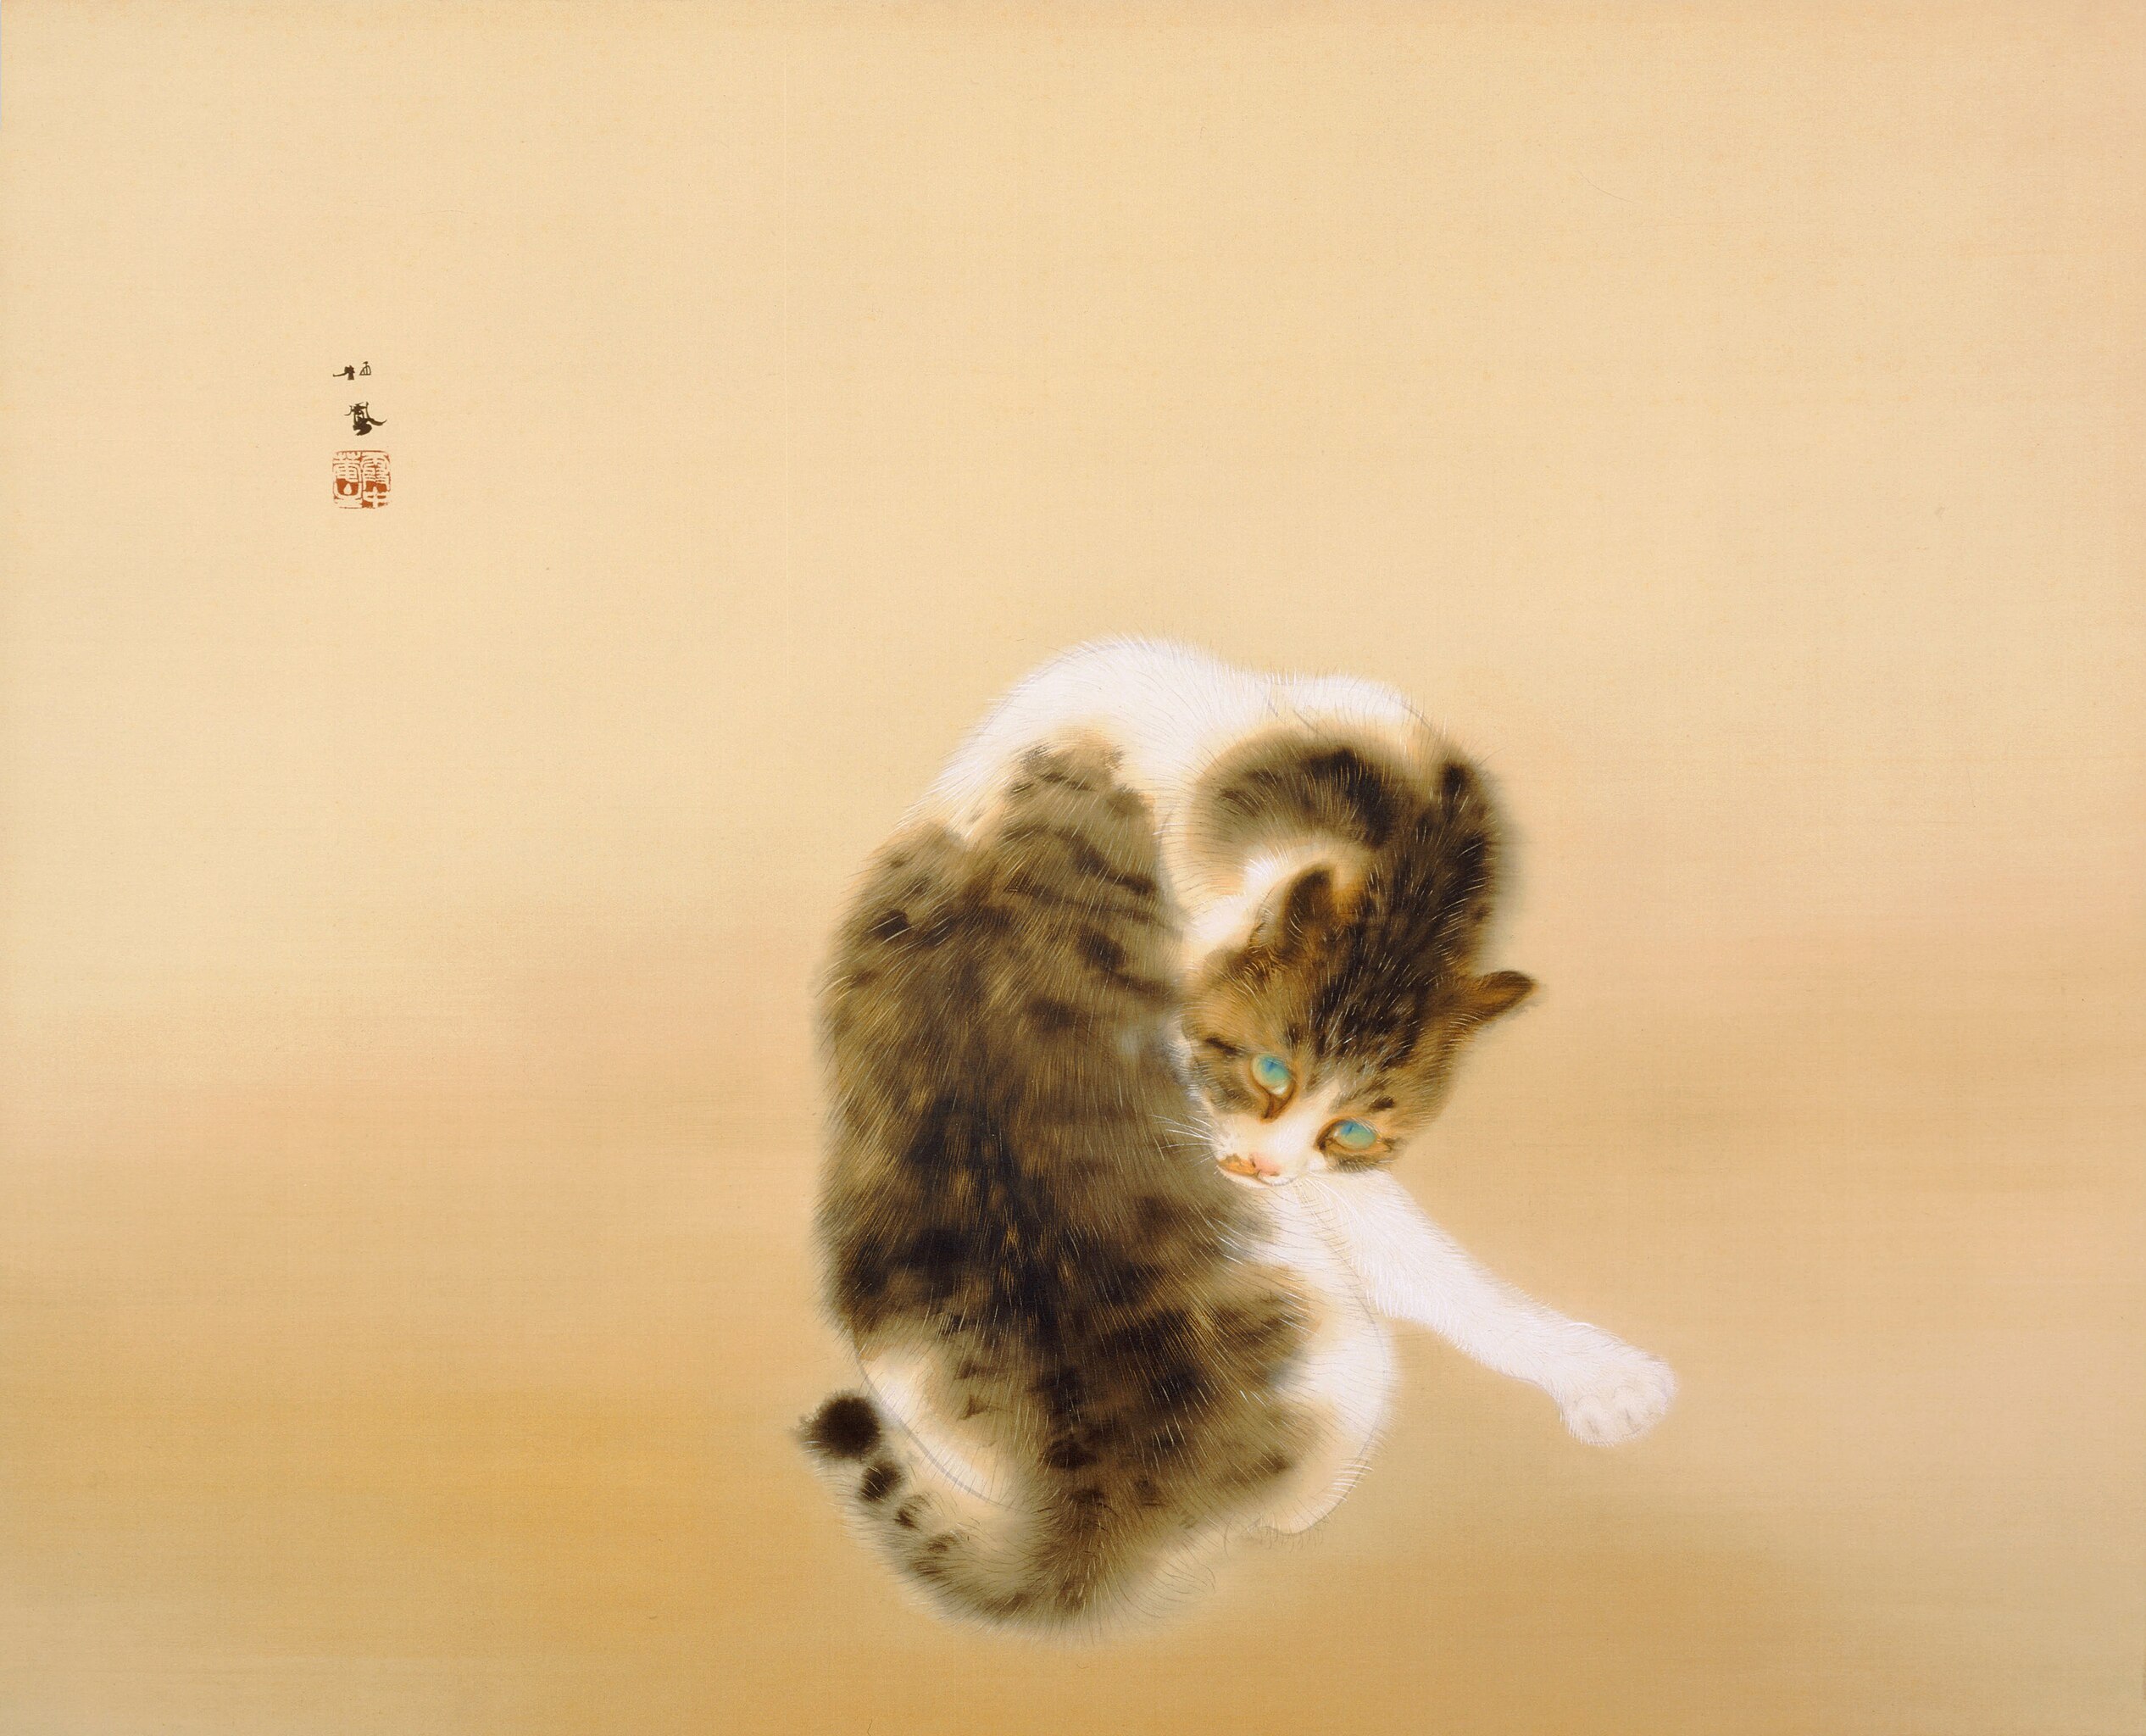 Pręgowany kot by Takeuchi Seihō - 1924 r. - 101,6 x 81,9 cm 